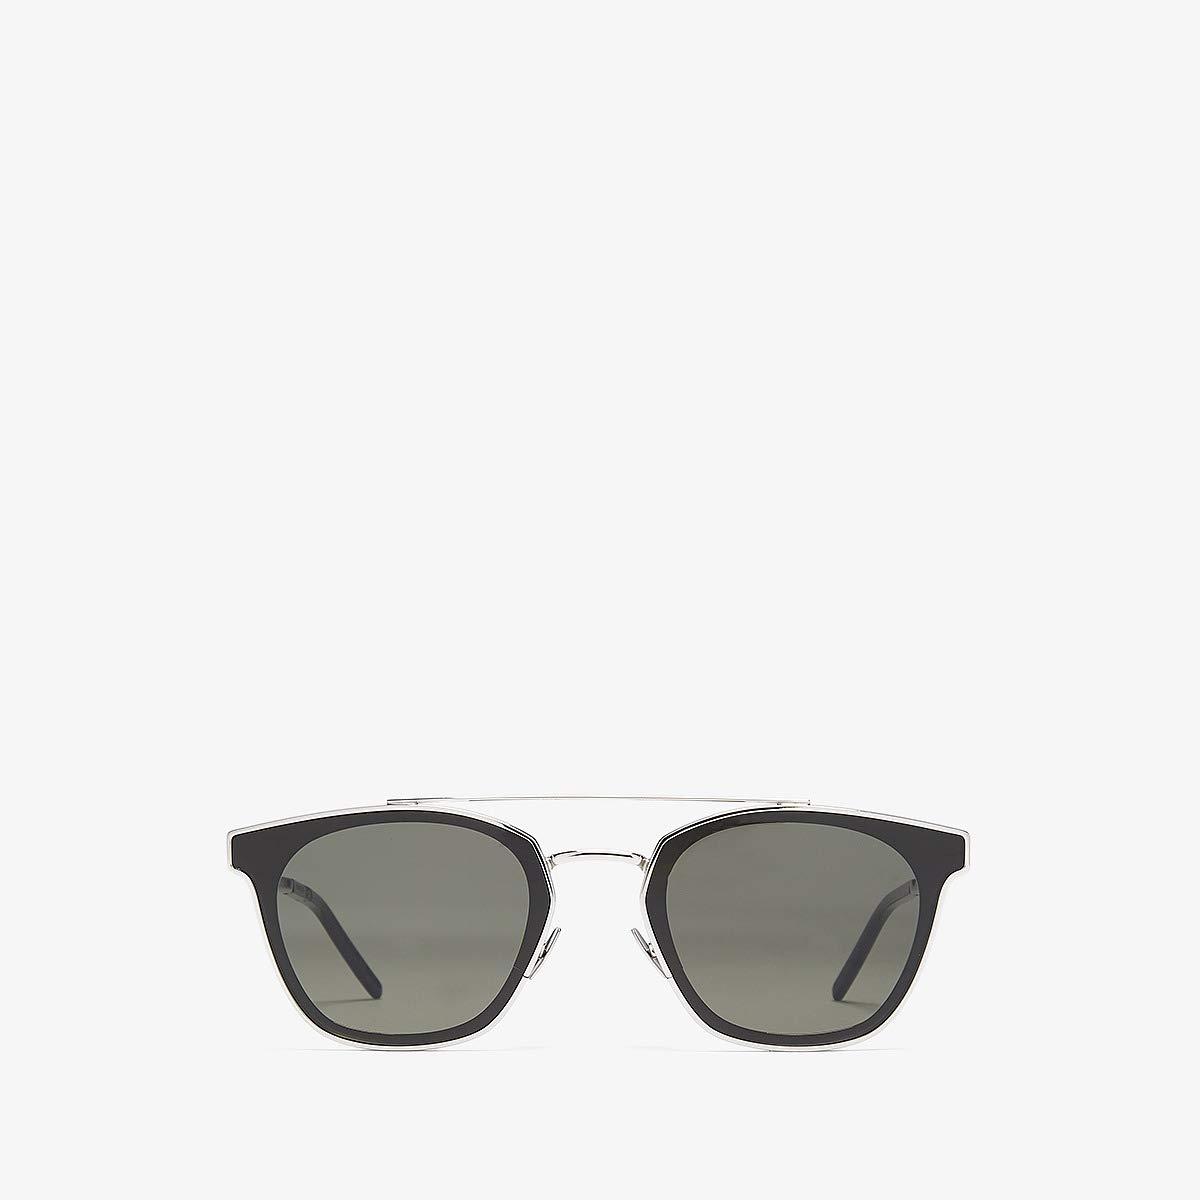 Saint Laurent Silver Sl 28 Metal Sunglasses in Metallic for Men - Save ...